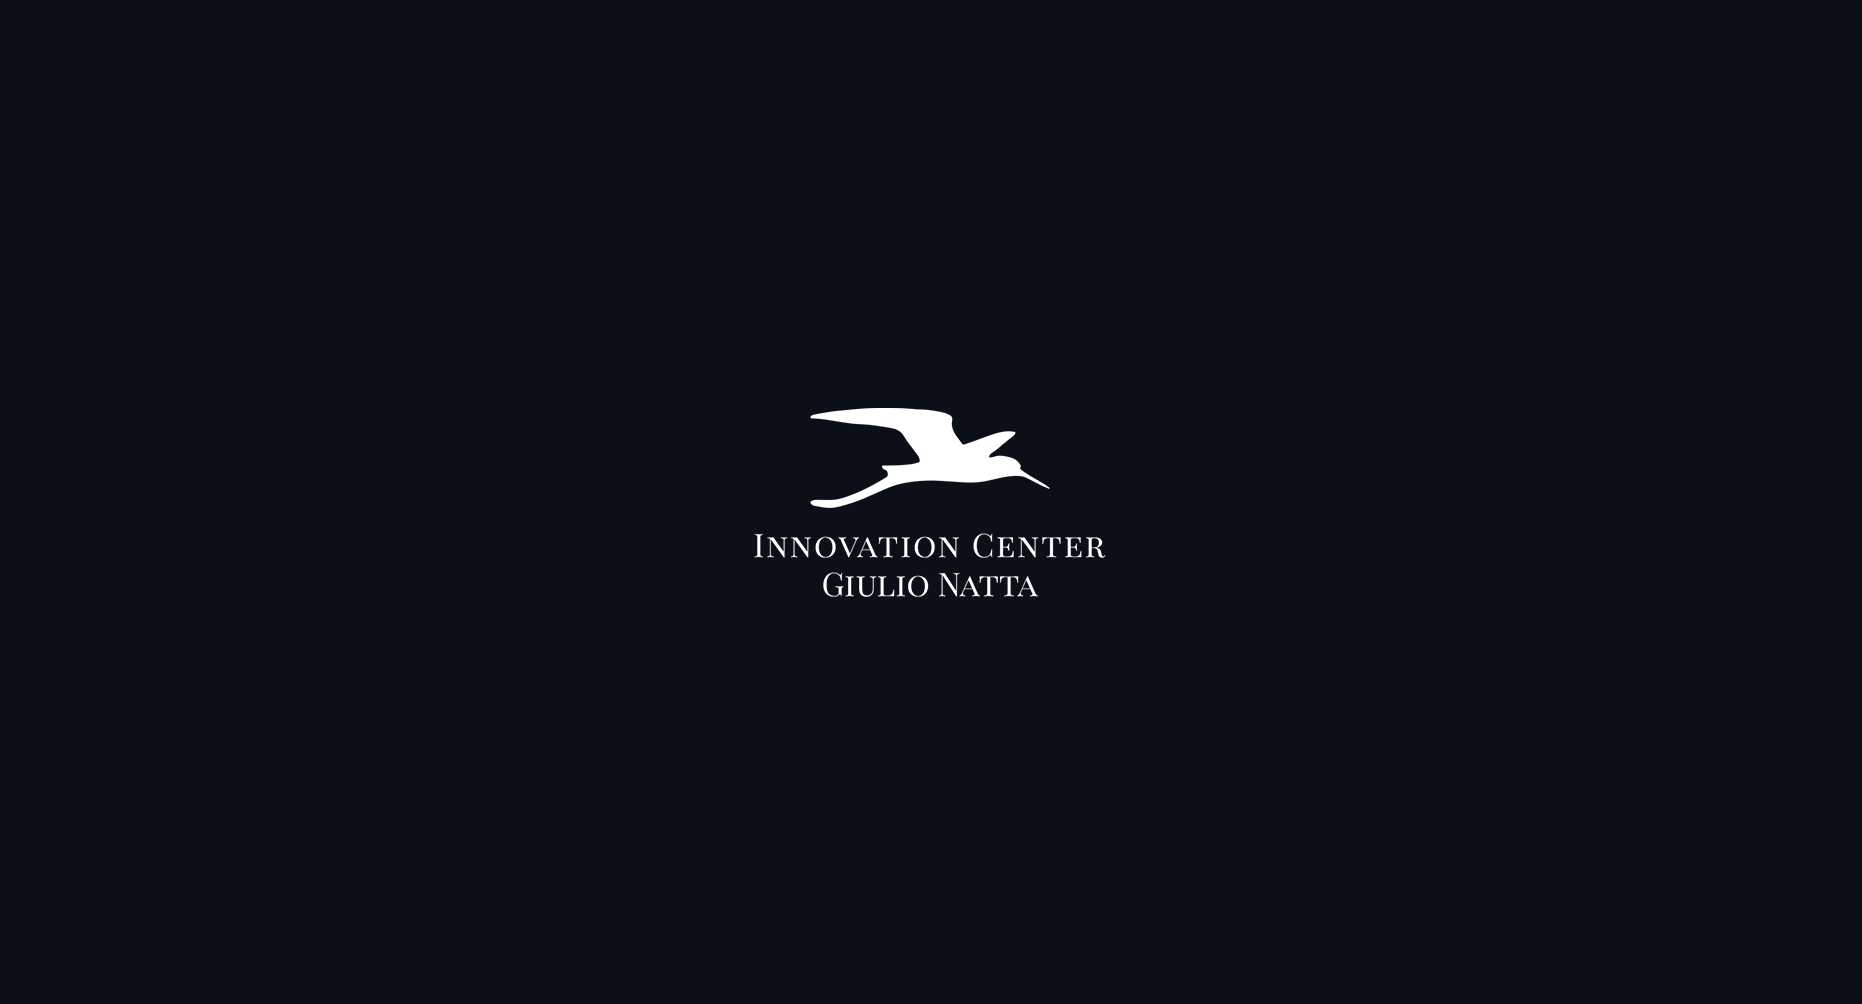 Innovation Center Giulio Natta